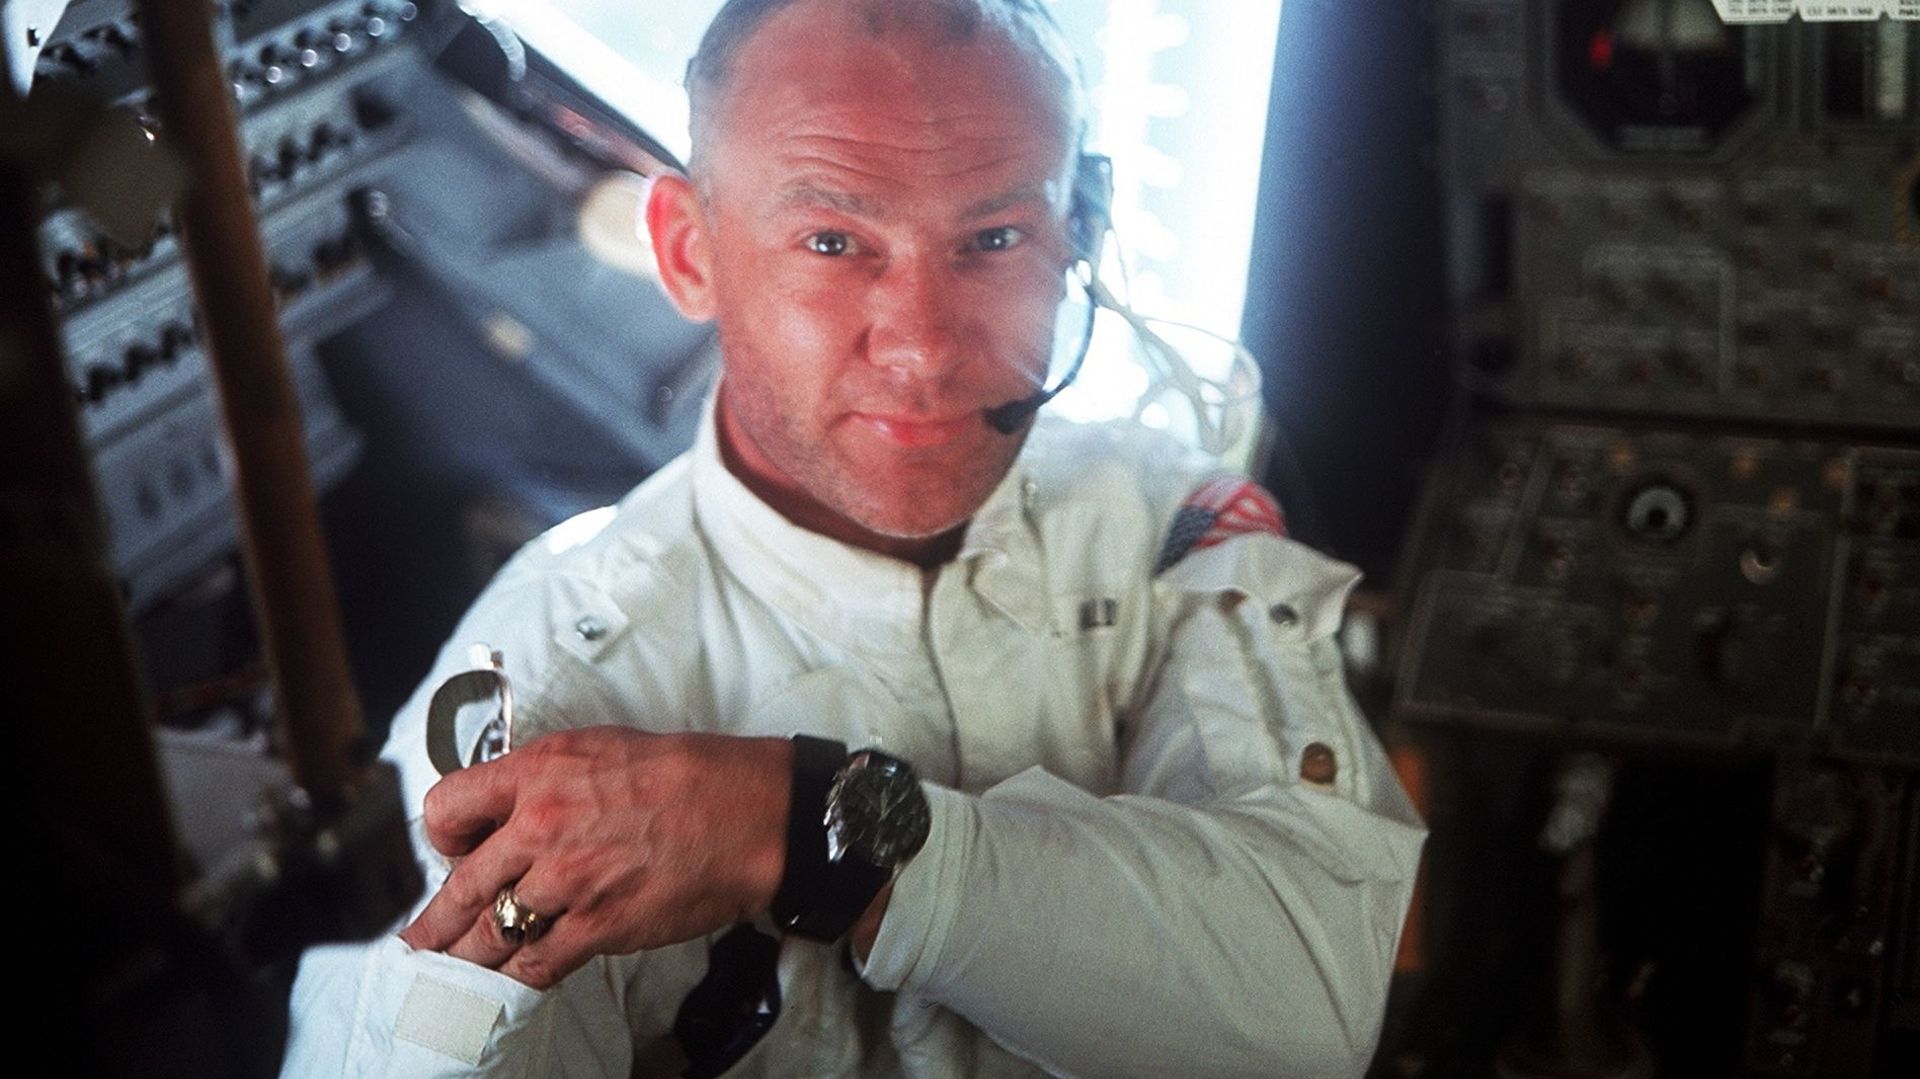 Edwin Aldrin Jr., pilote du module lunaire, lors de l’alunissage en 1969